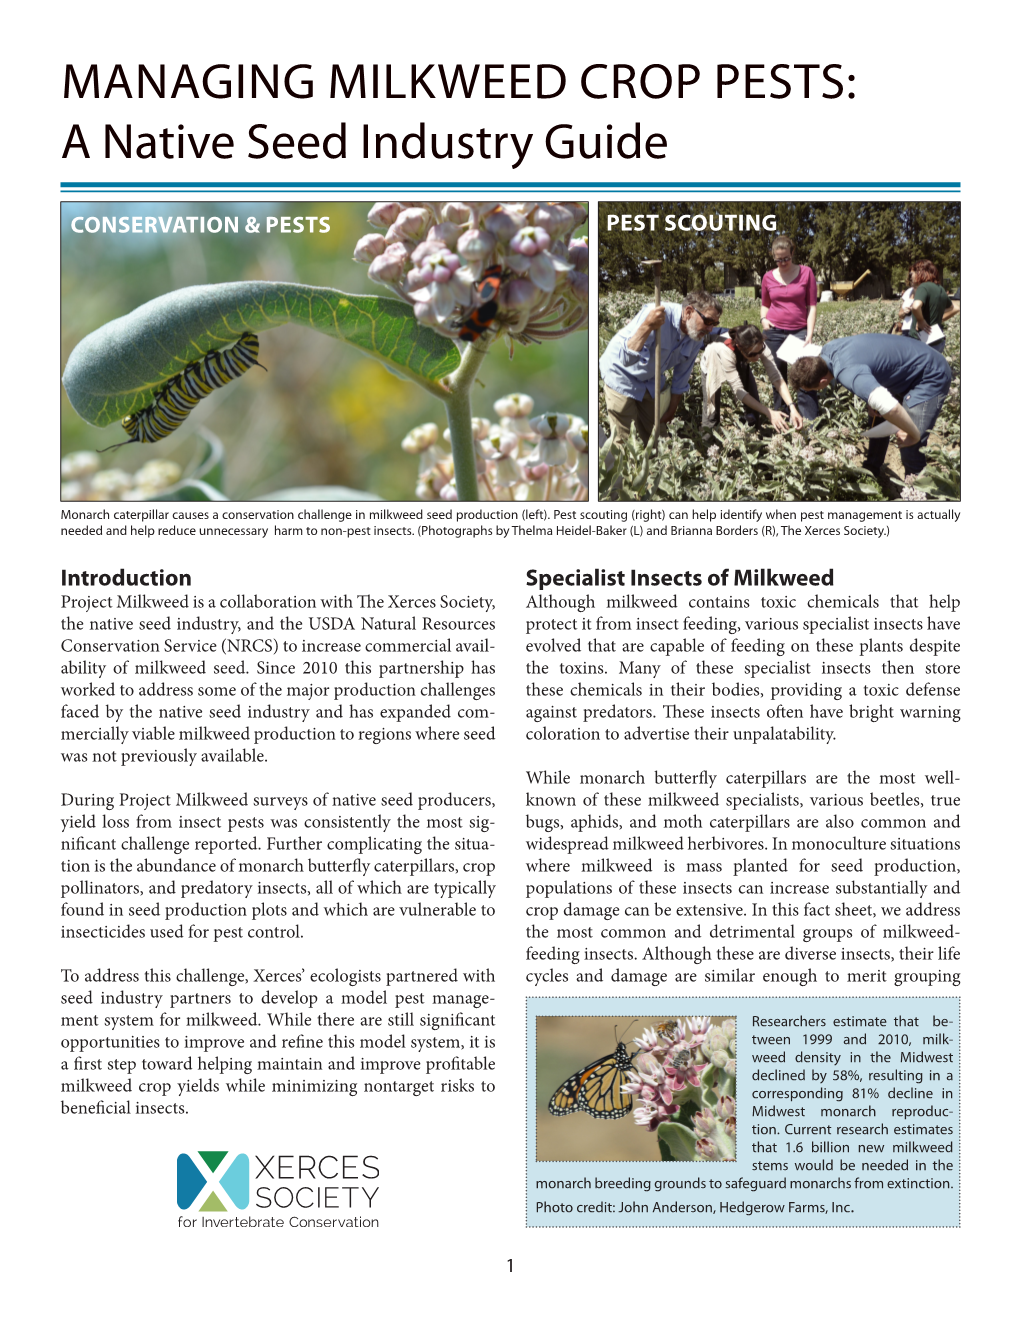 MANAGING MILKWEED CROP PESTS: a Native Seed Industry Guide